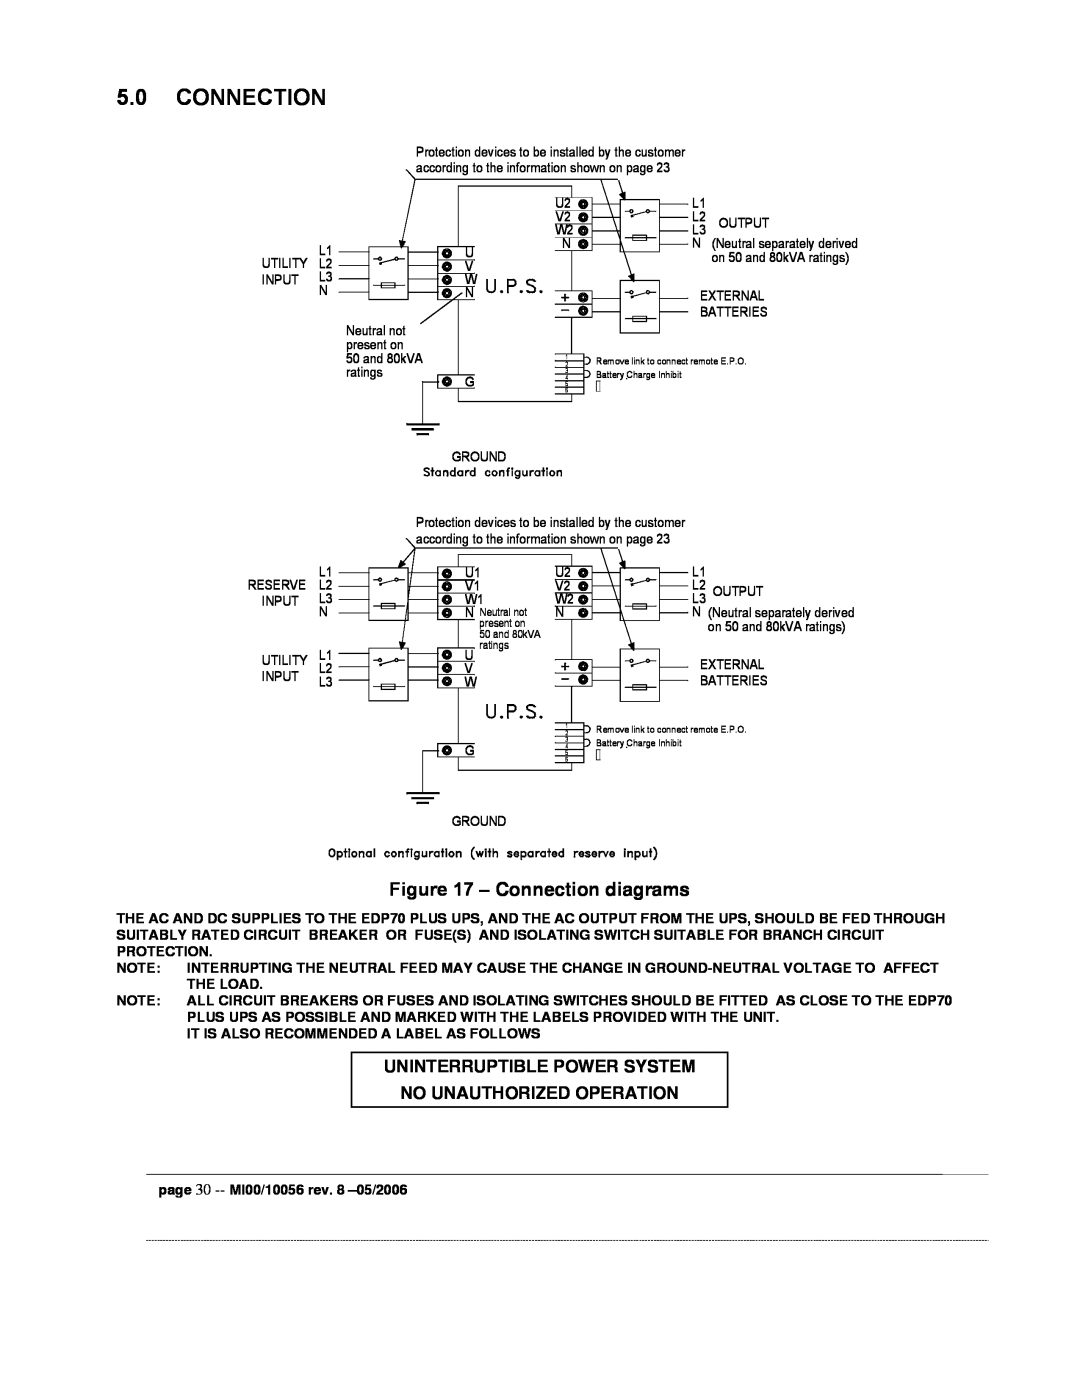 Garmin EDP70 manual Connection, Uninterruptible Power System, No Unauthorized Operation 